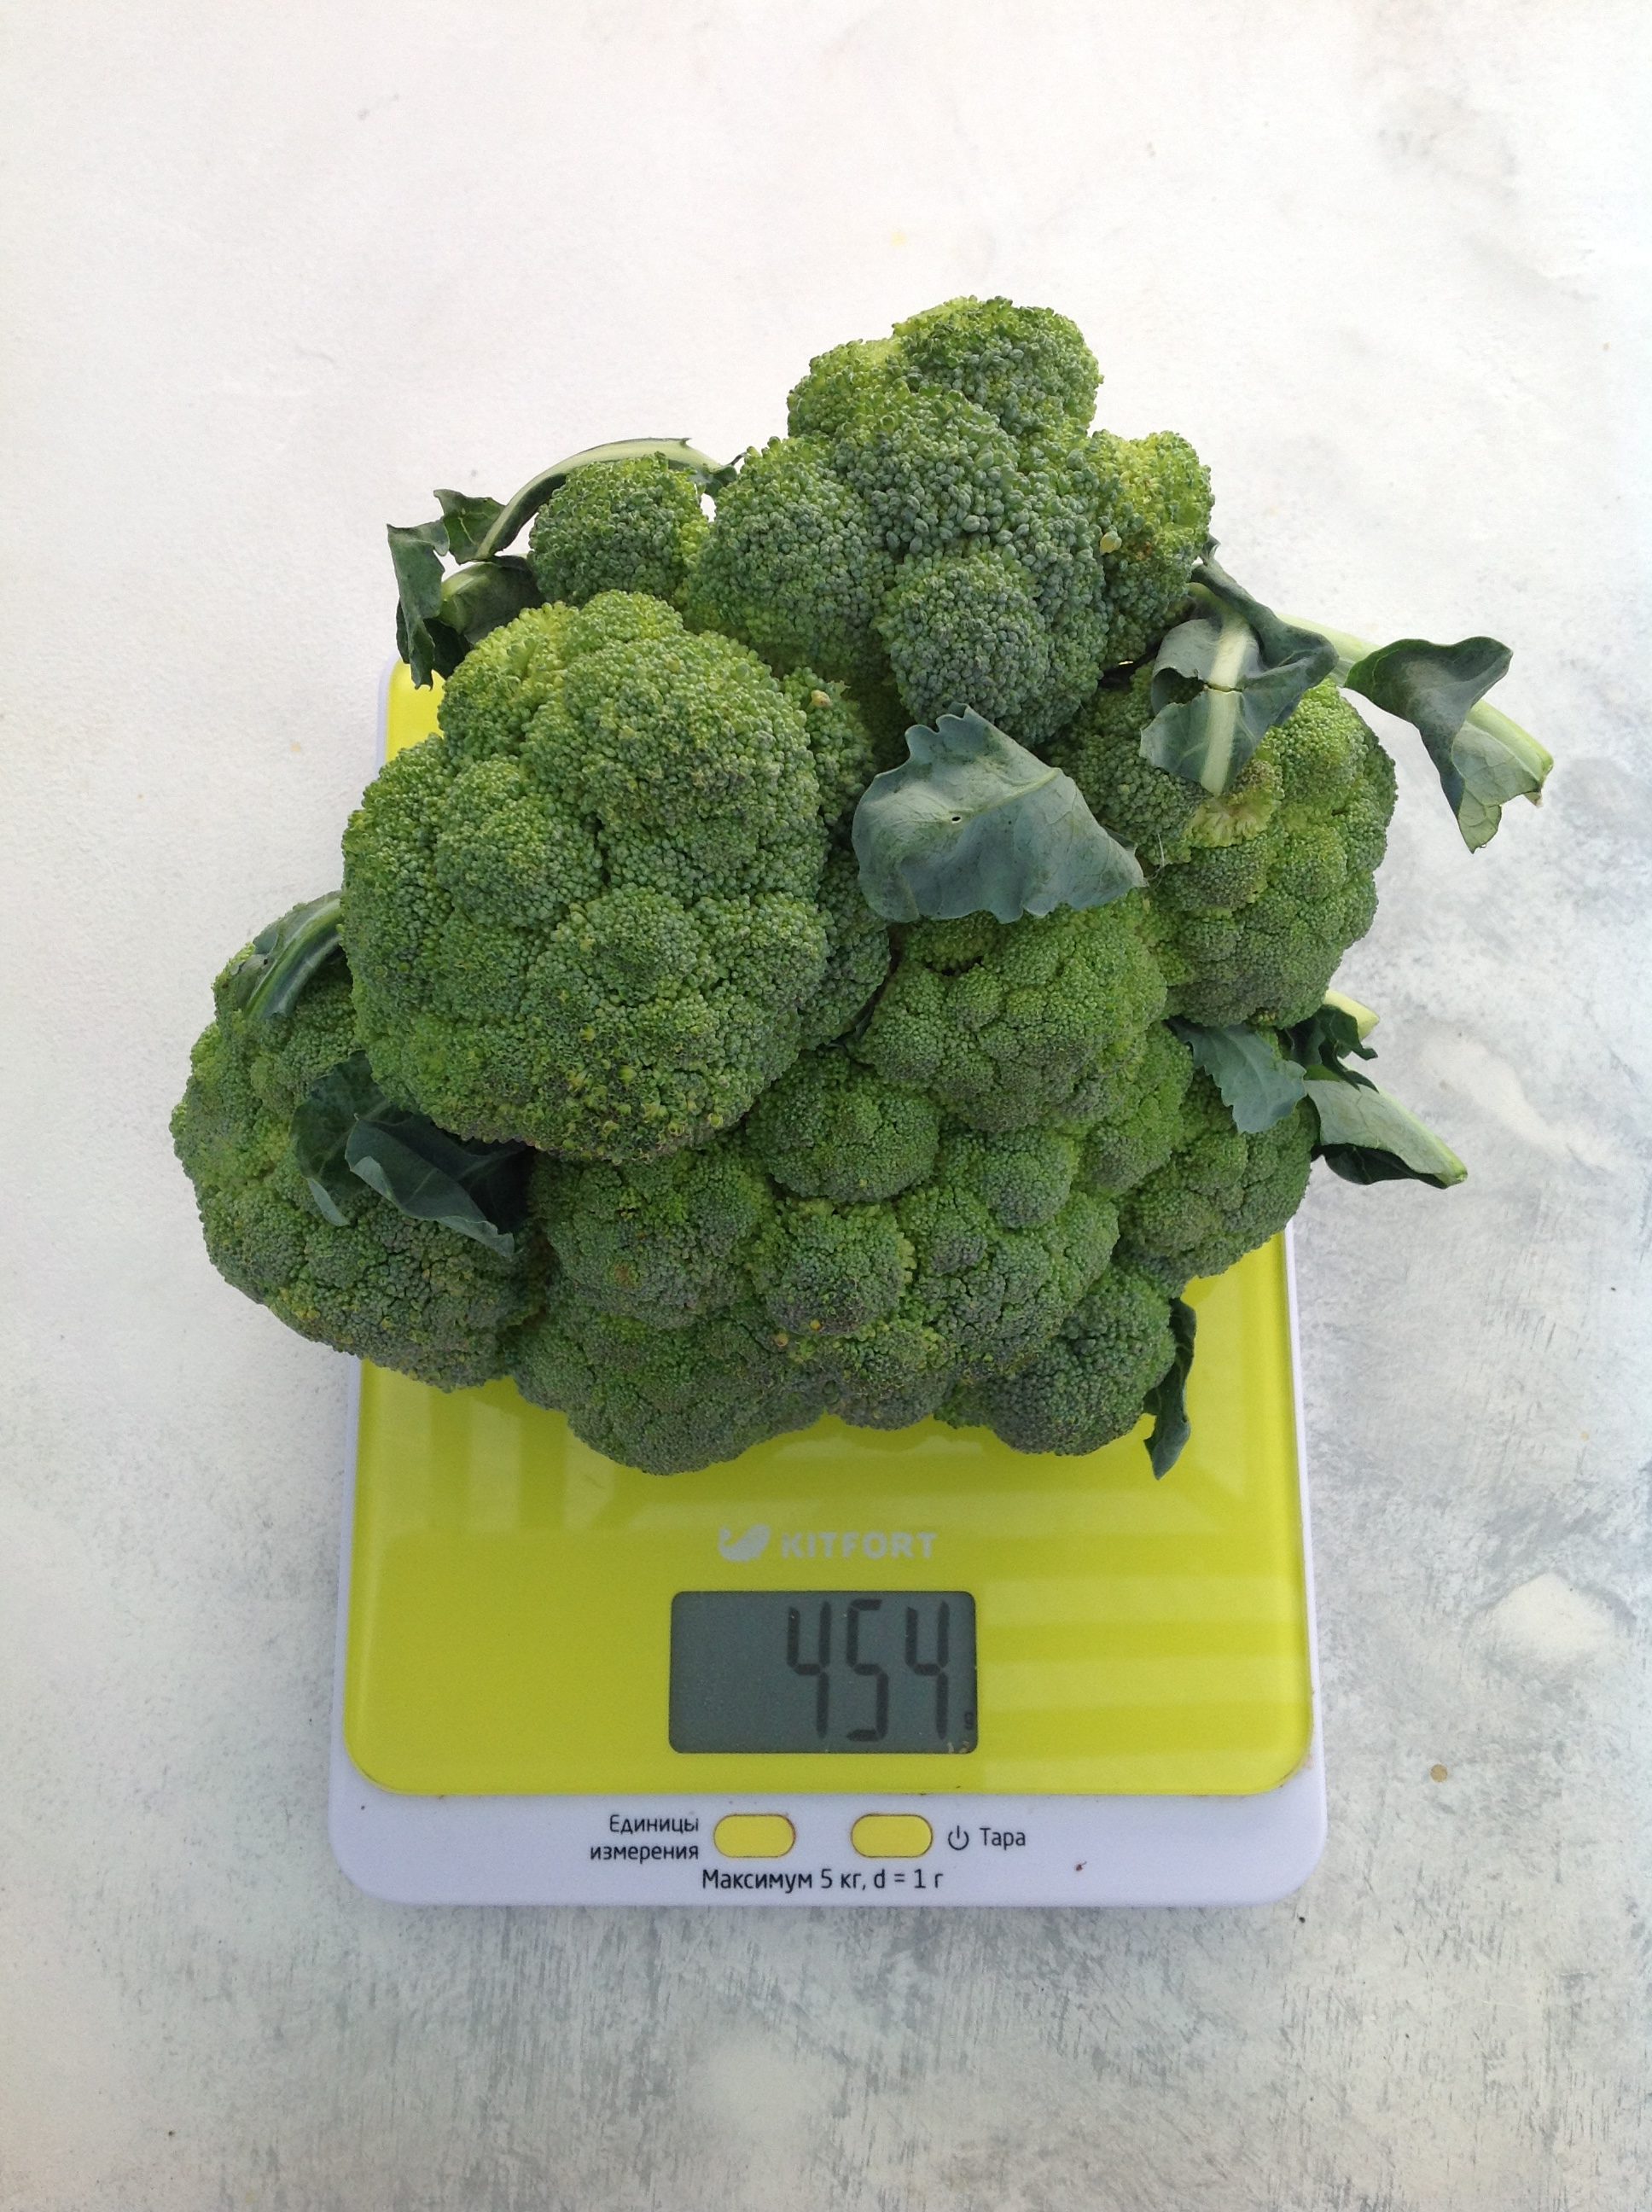 brokoli dengan berat sedang